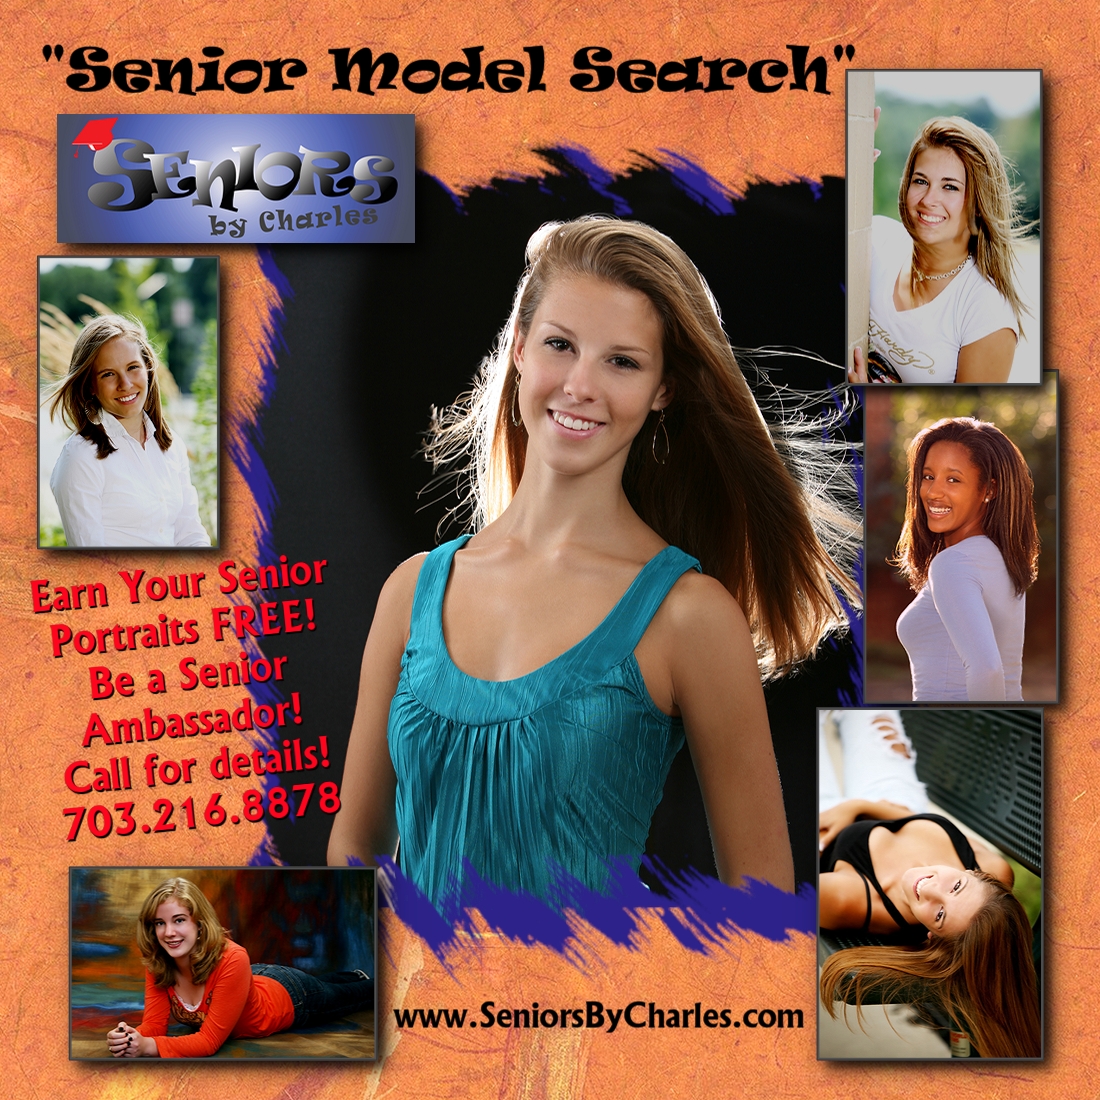 Senior Model Search